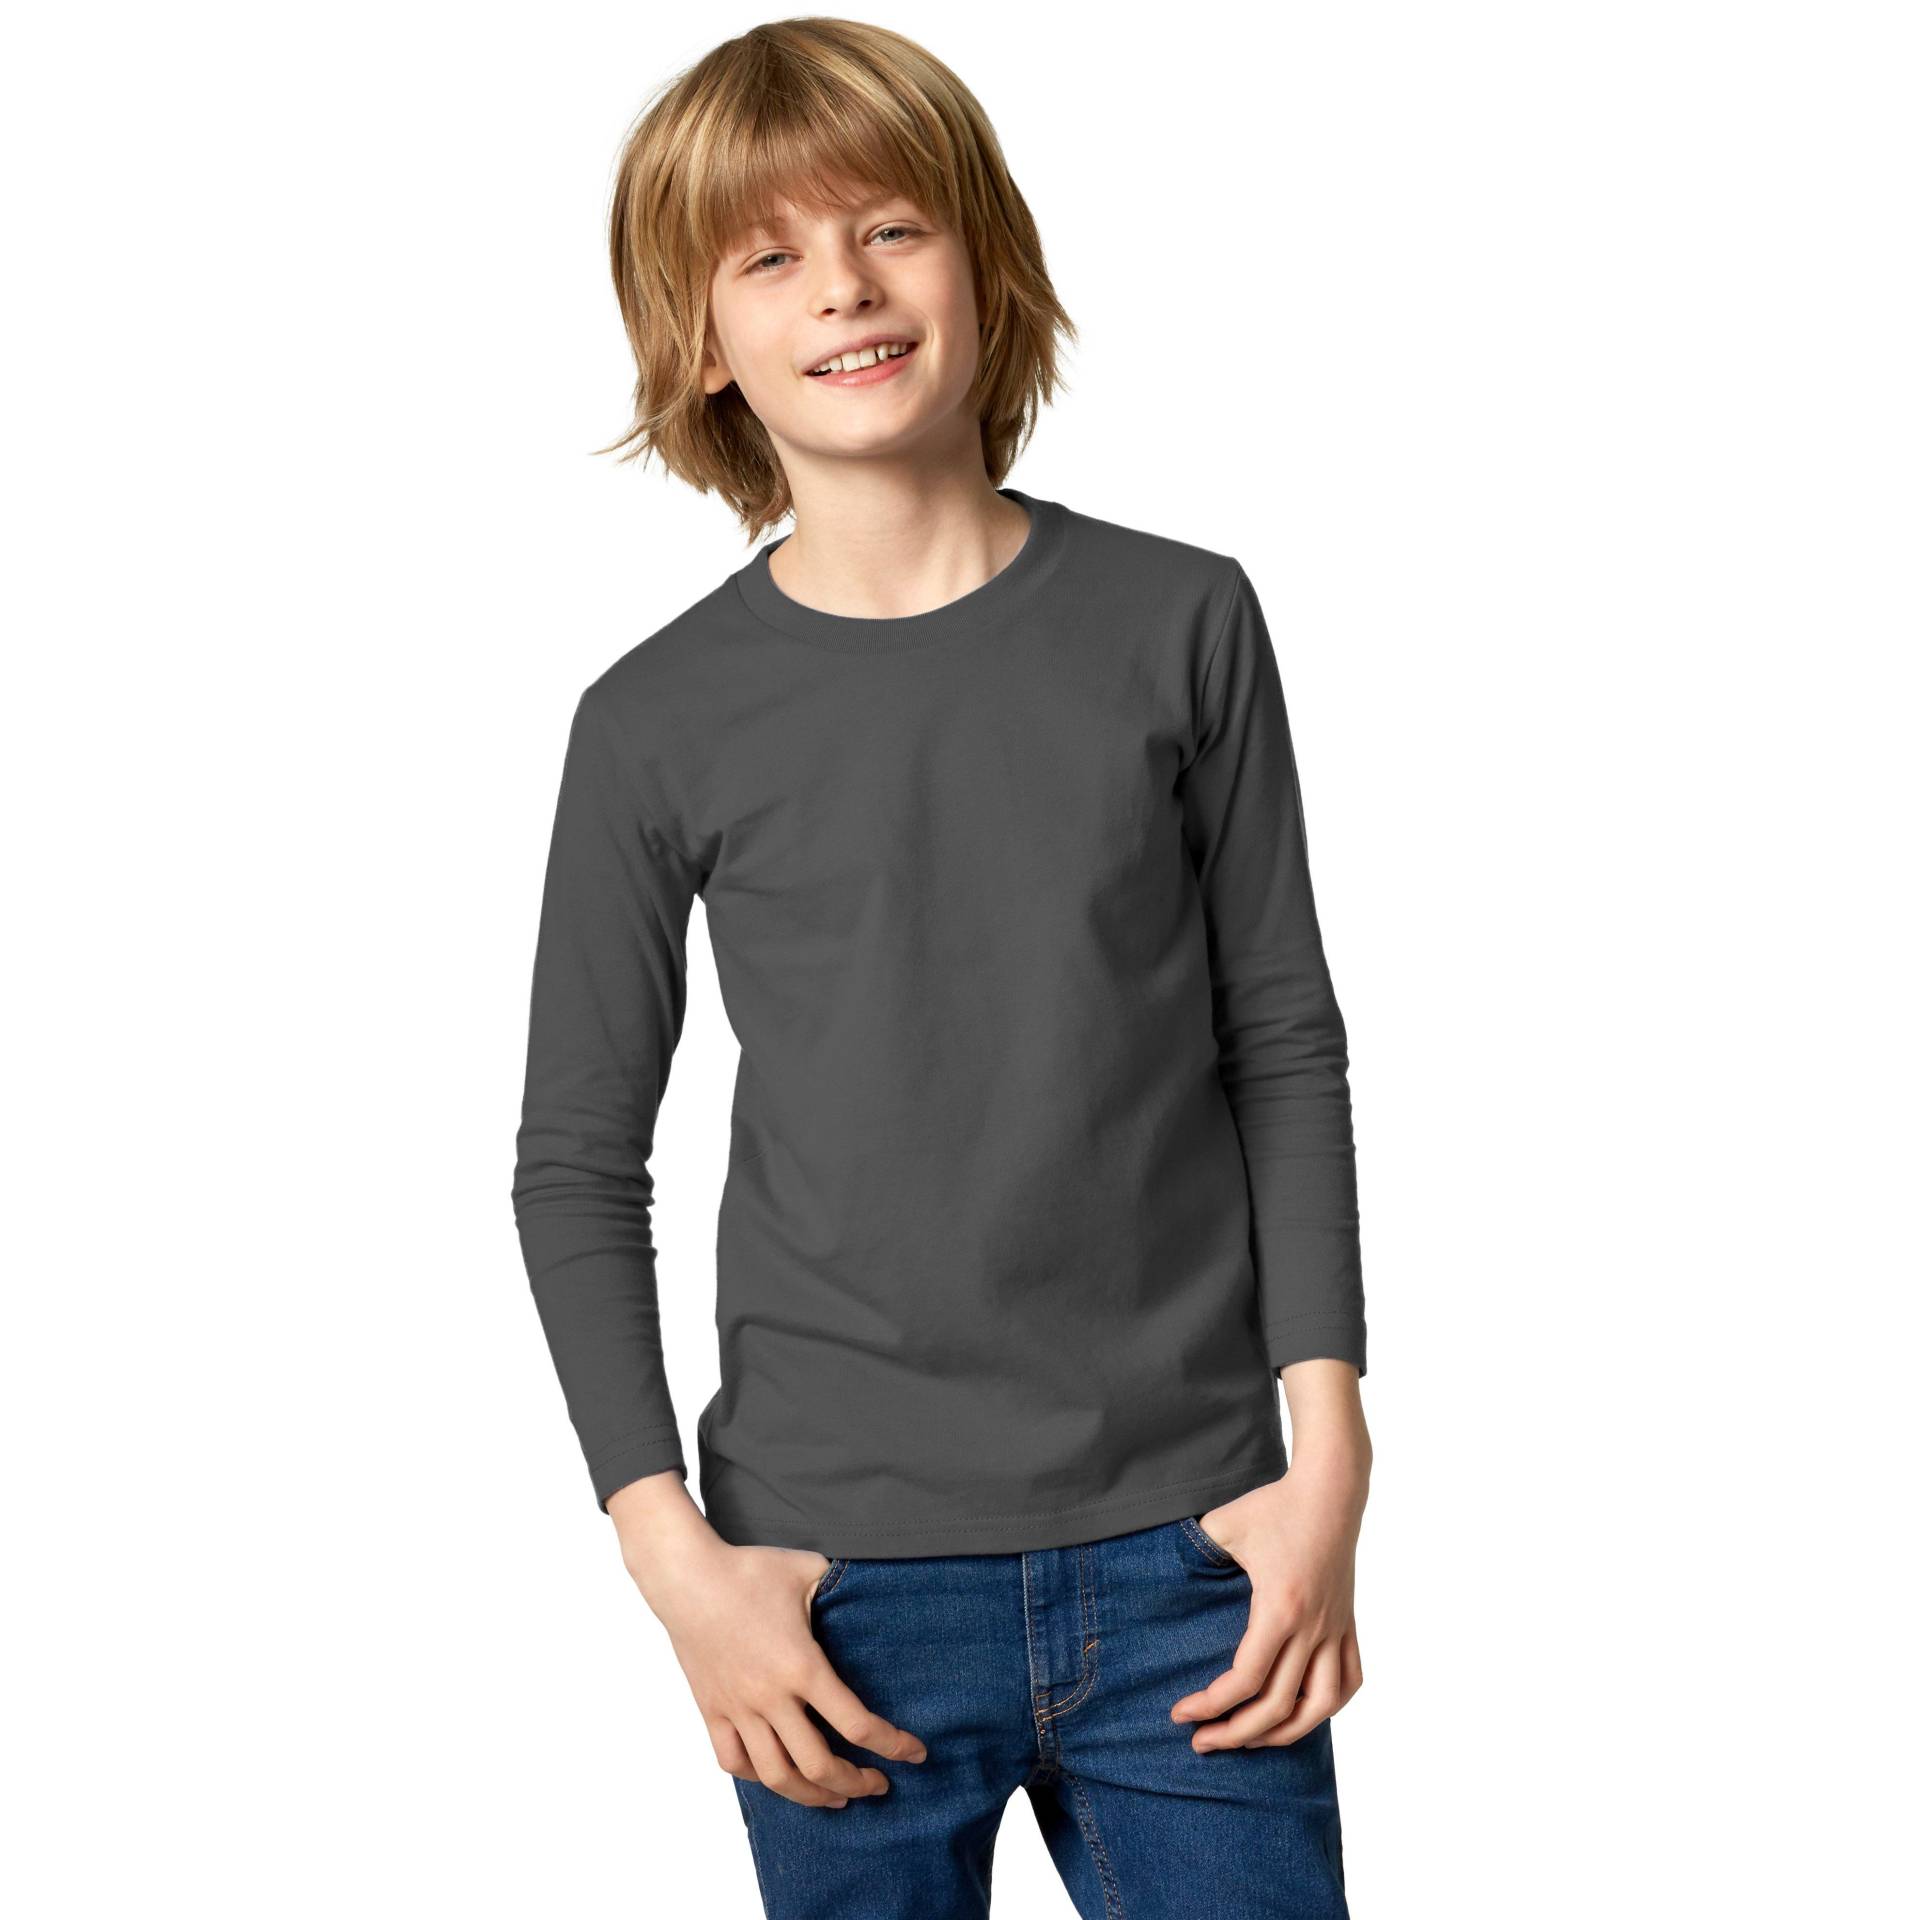 Langarm-shirt Kinder Jungen Grau 116 von Tectake